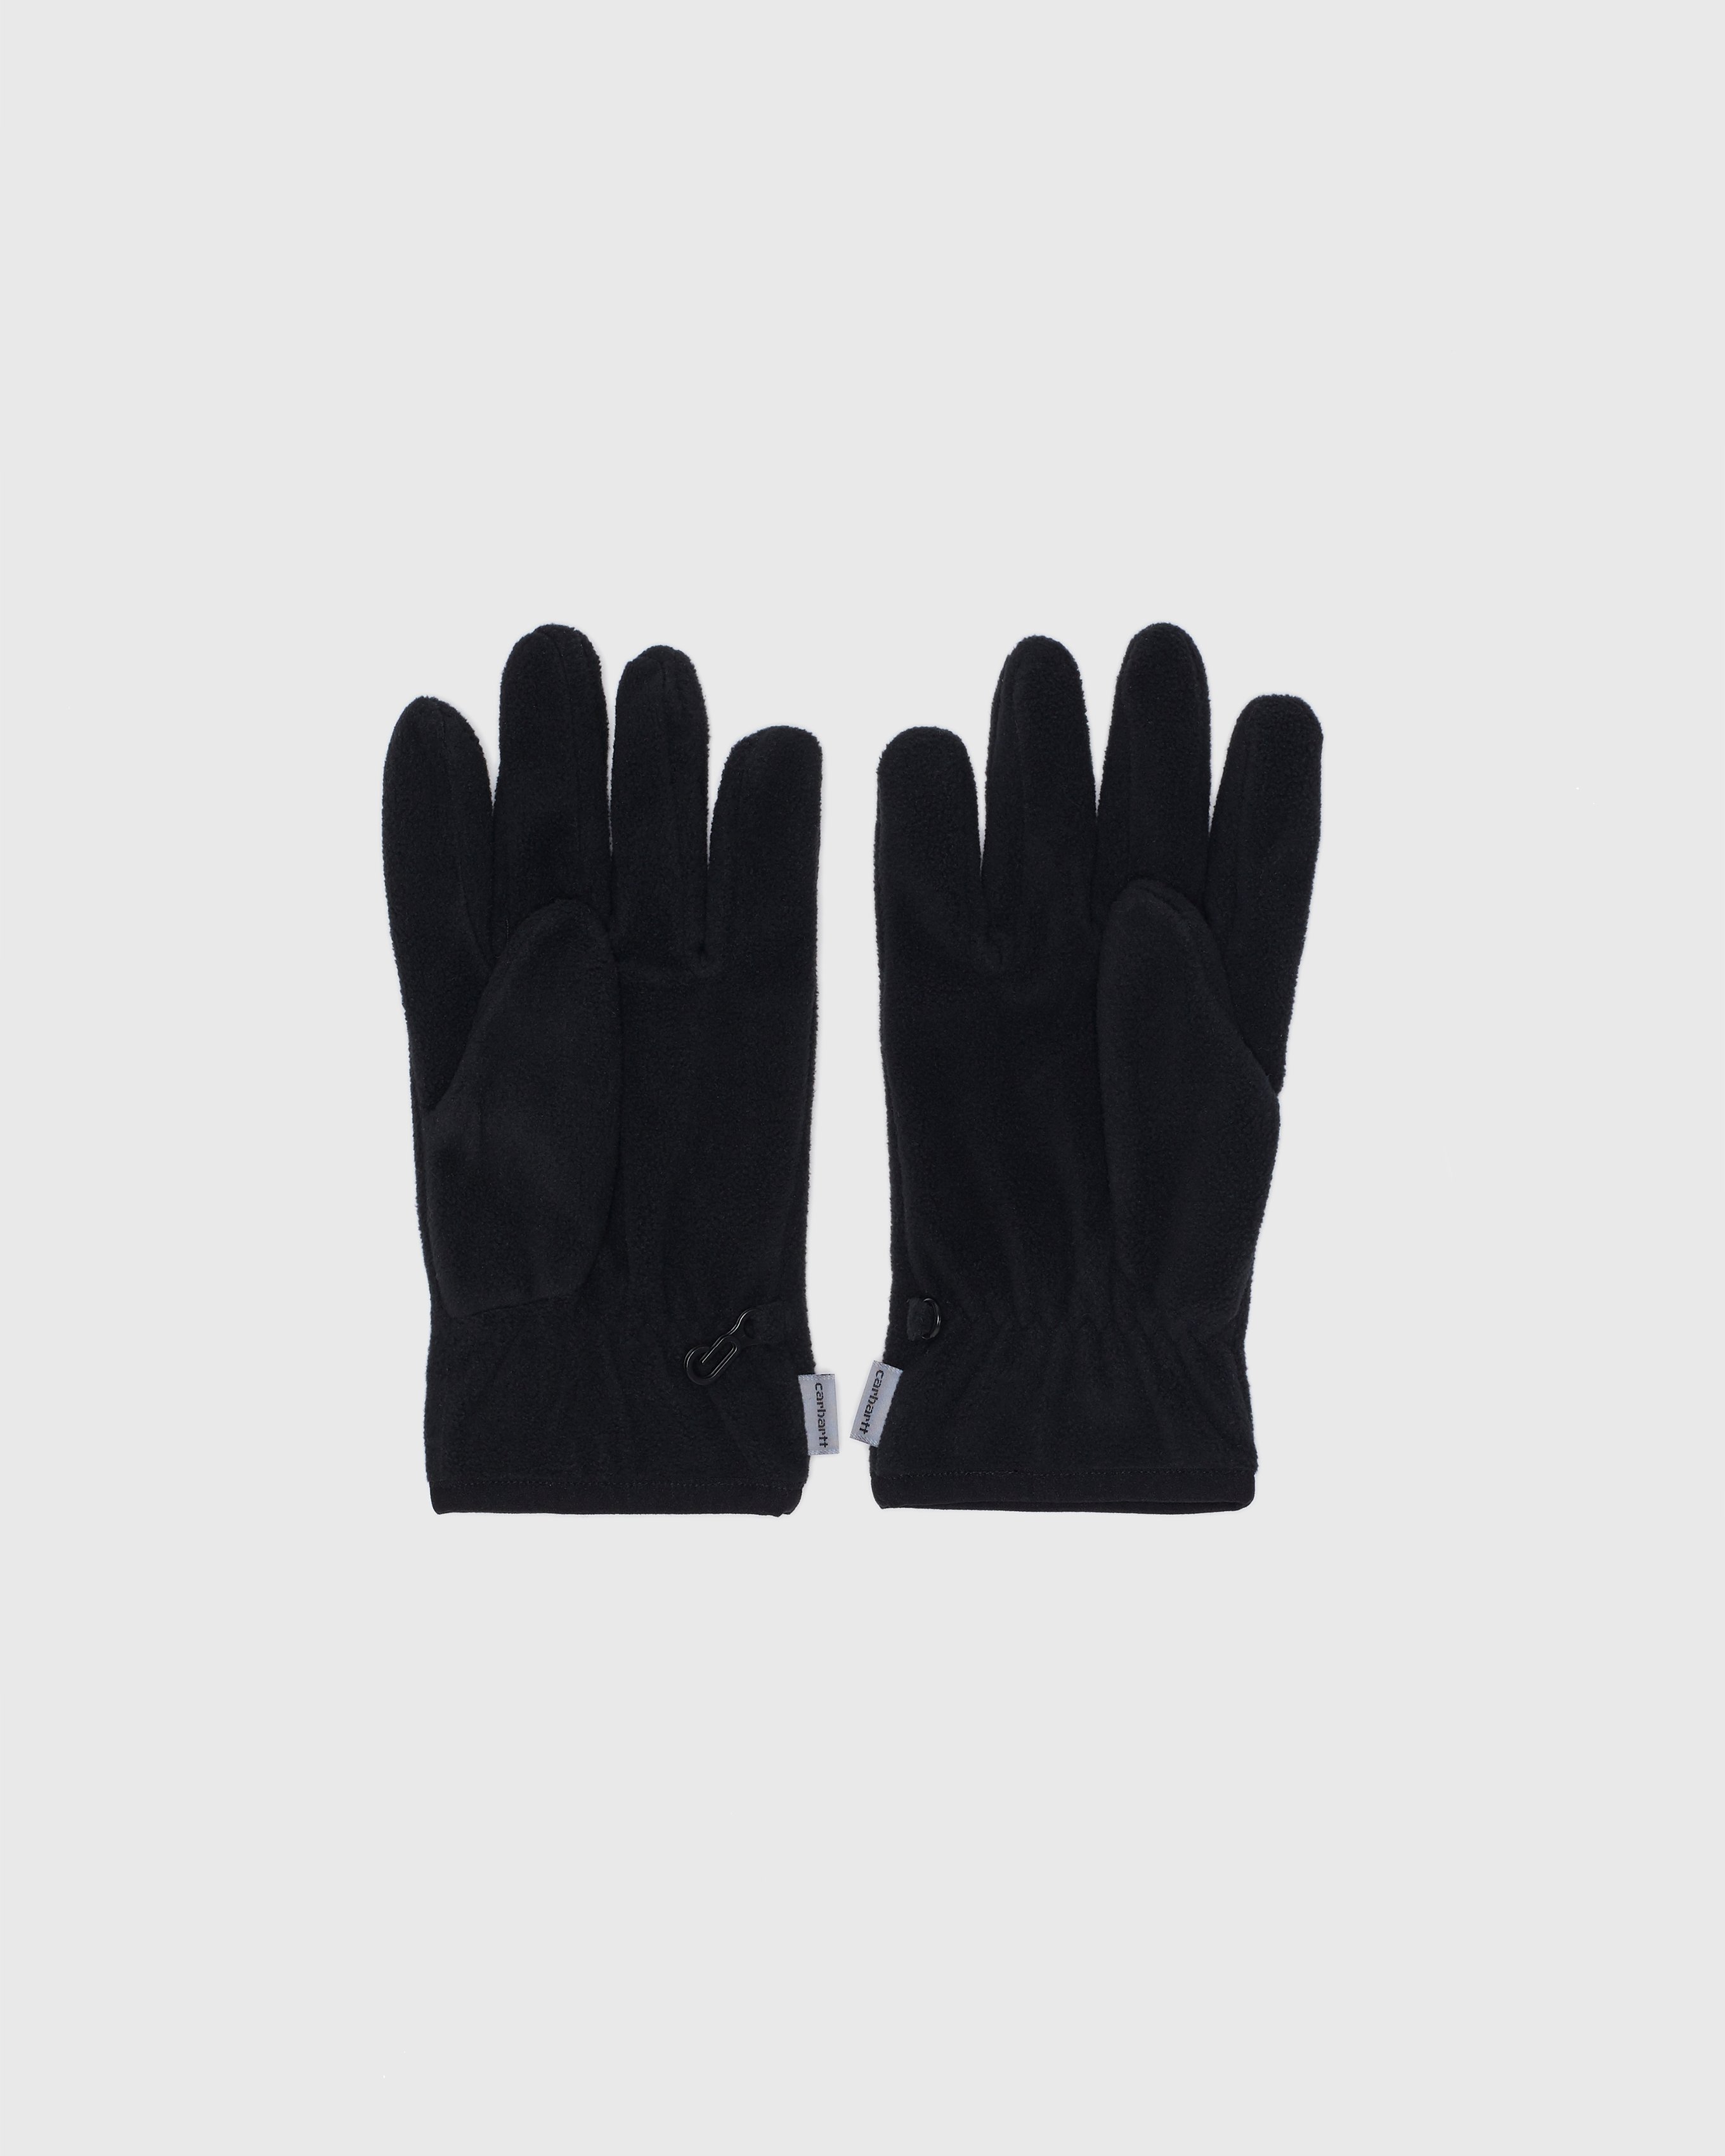 Carhartt WIP x Ljubav - Beaufort Gloves - Accessories - Black - Image 2